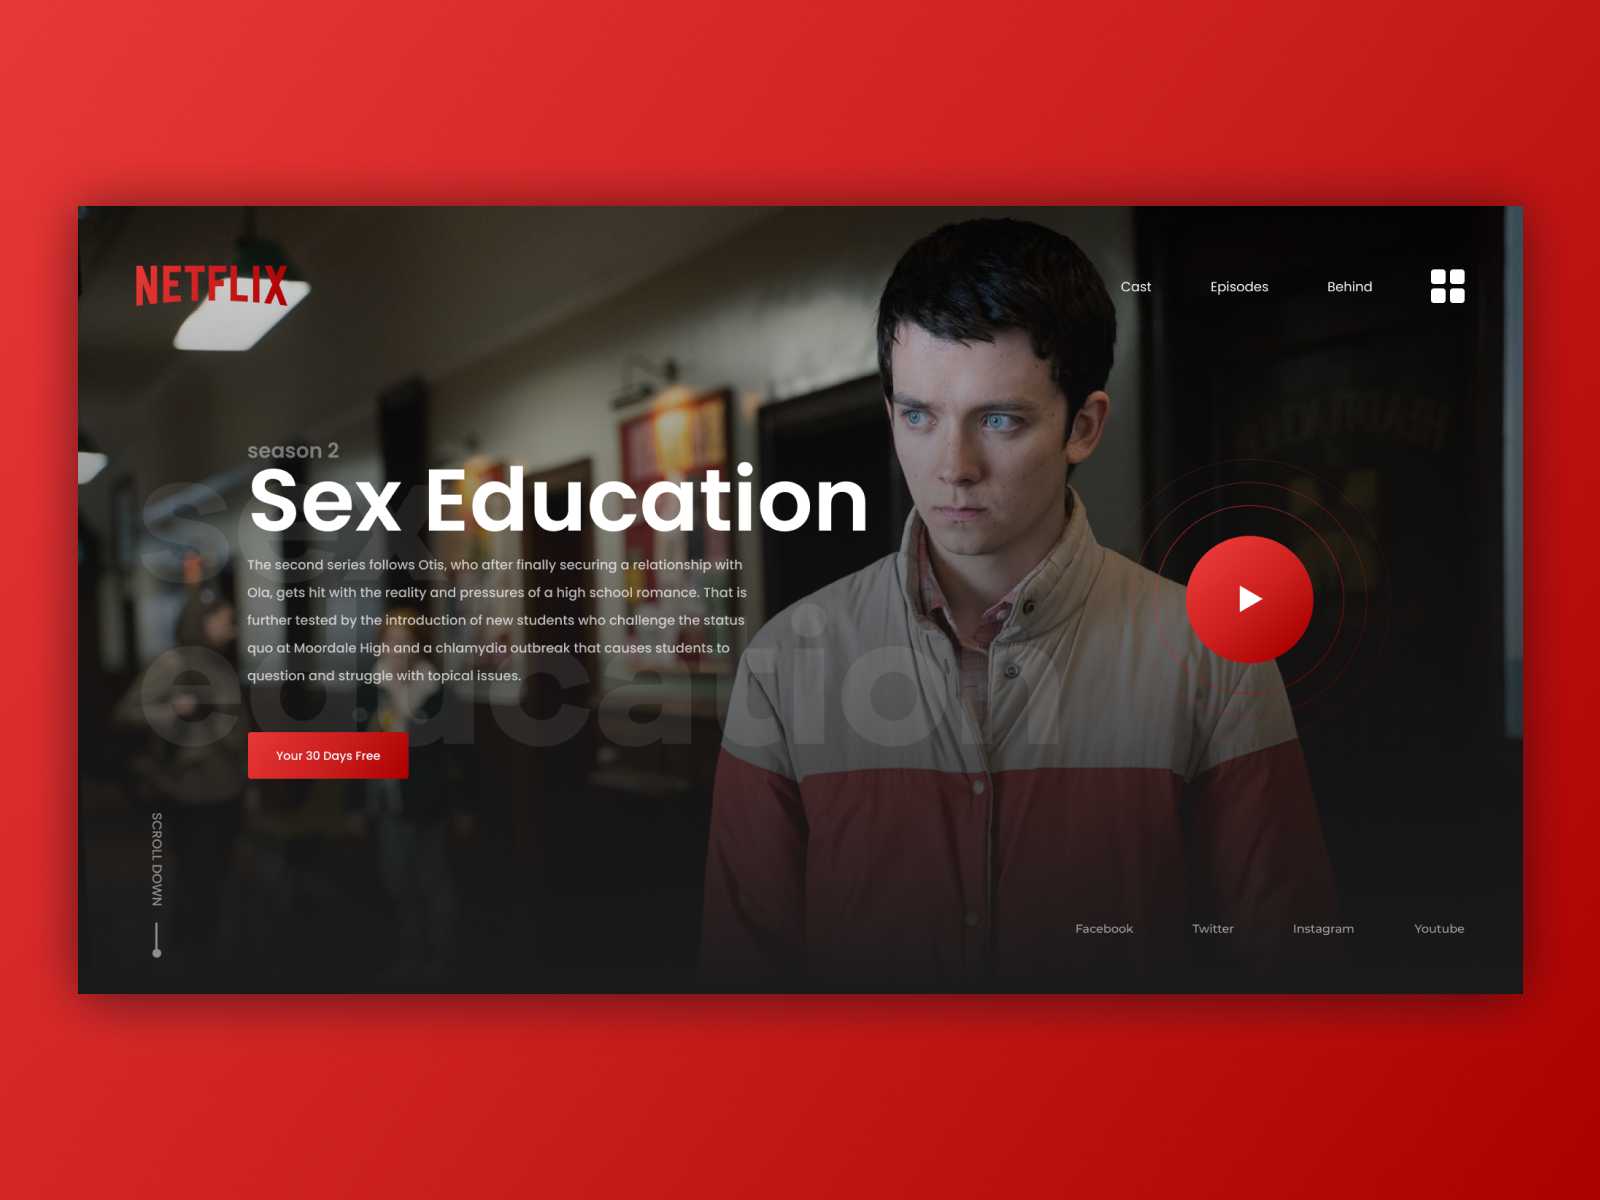 Netflix Sex Education By Alex Tkachev ⭐ On Dribbble